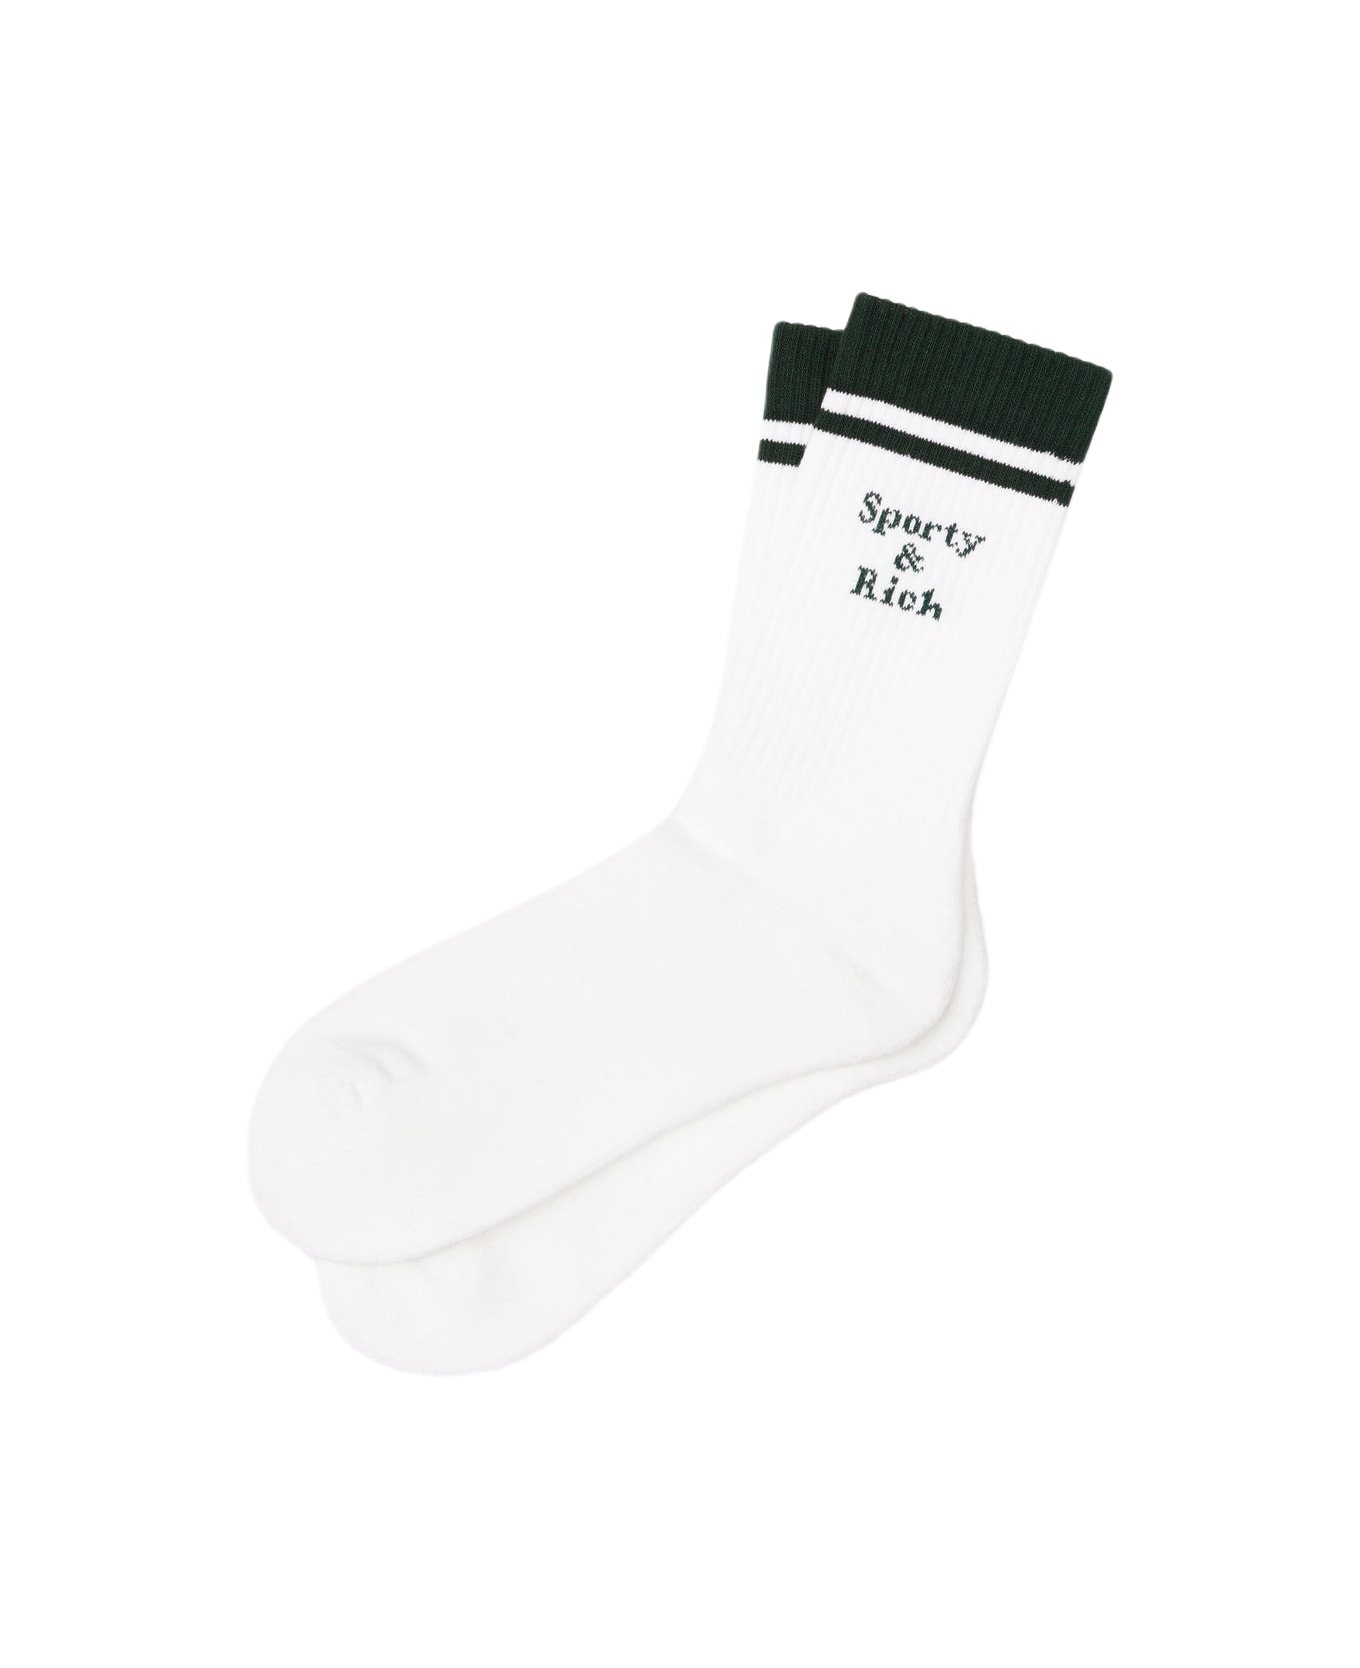 Sporty & Rich Socks - White